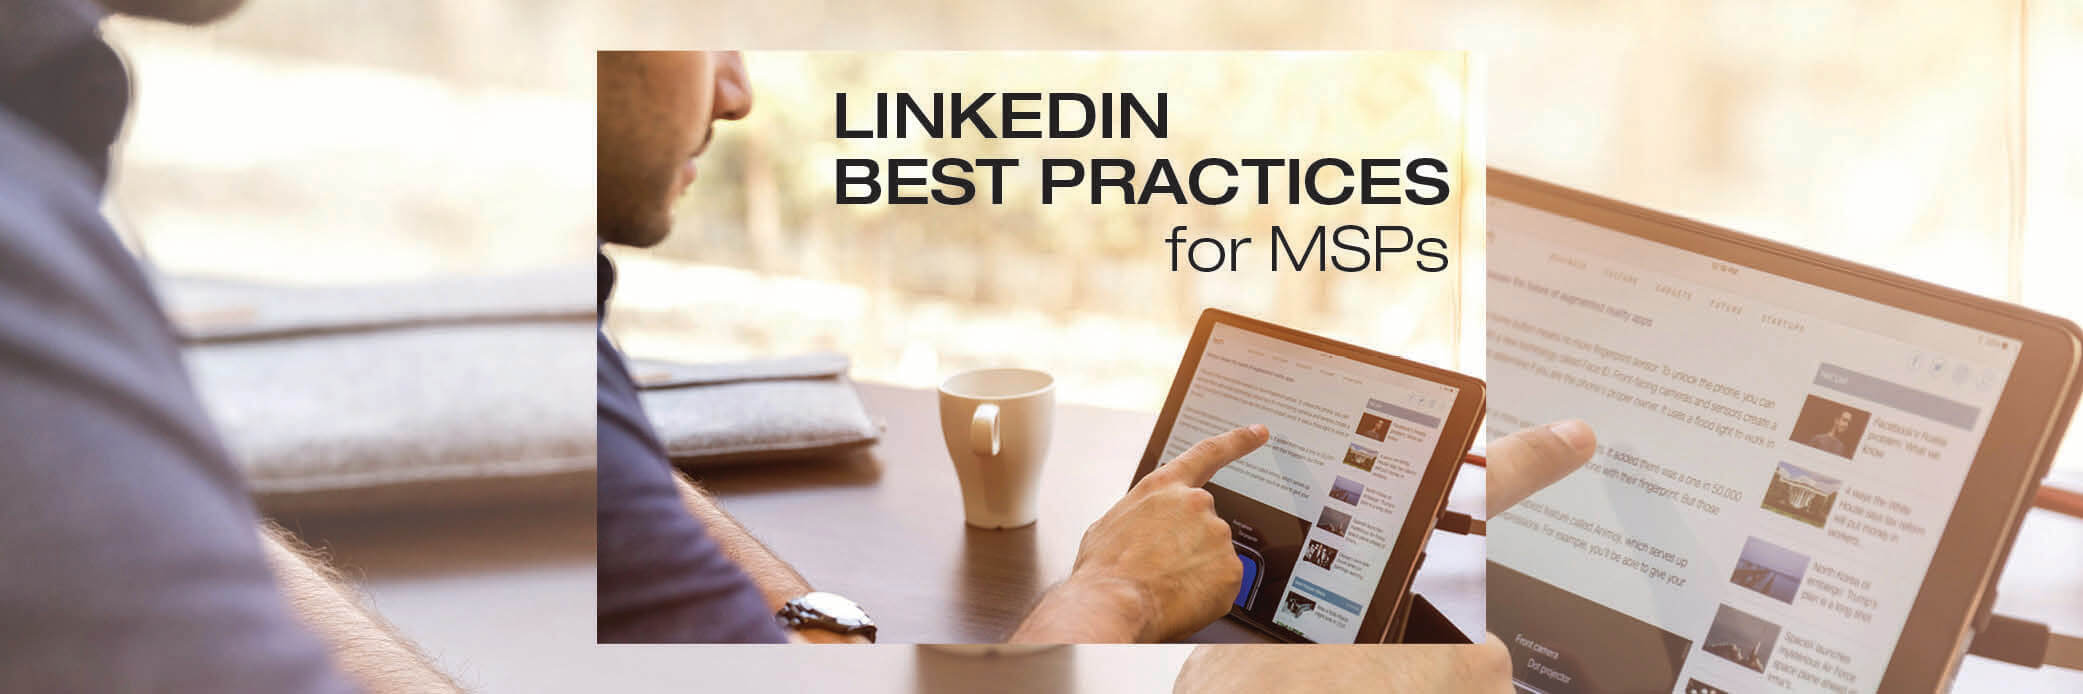 LinkedIn Best Practices for MSPs